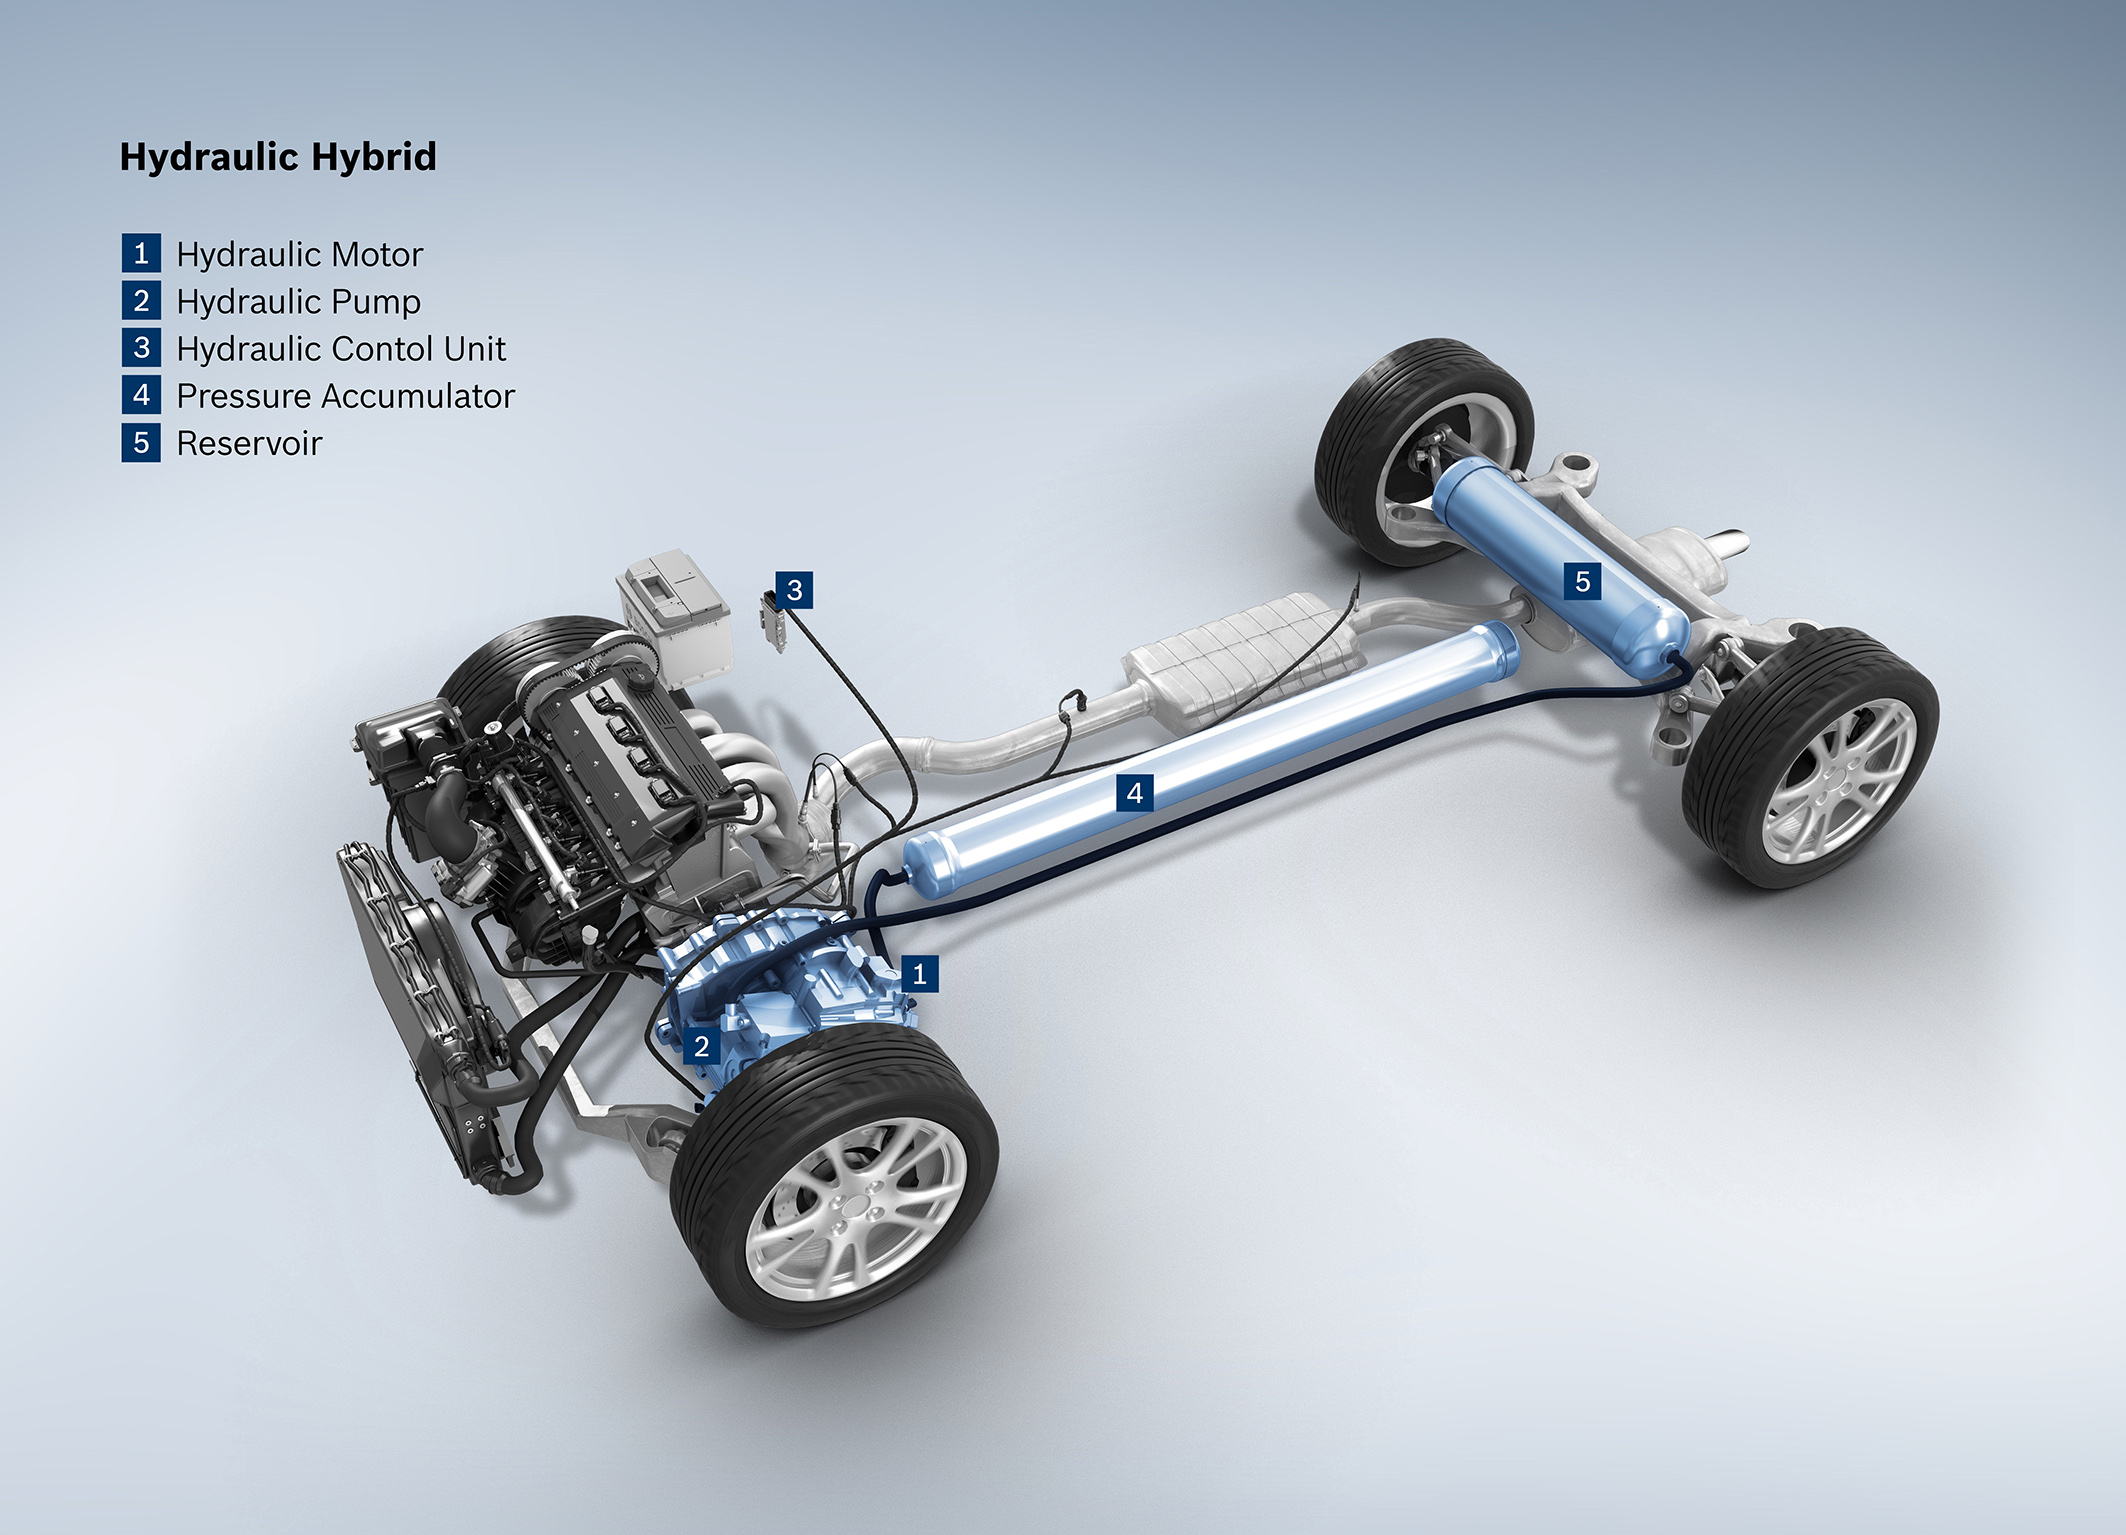 Hydraulic hybrid system overview